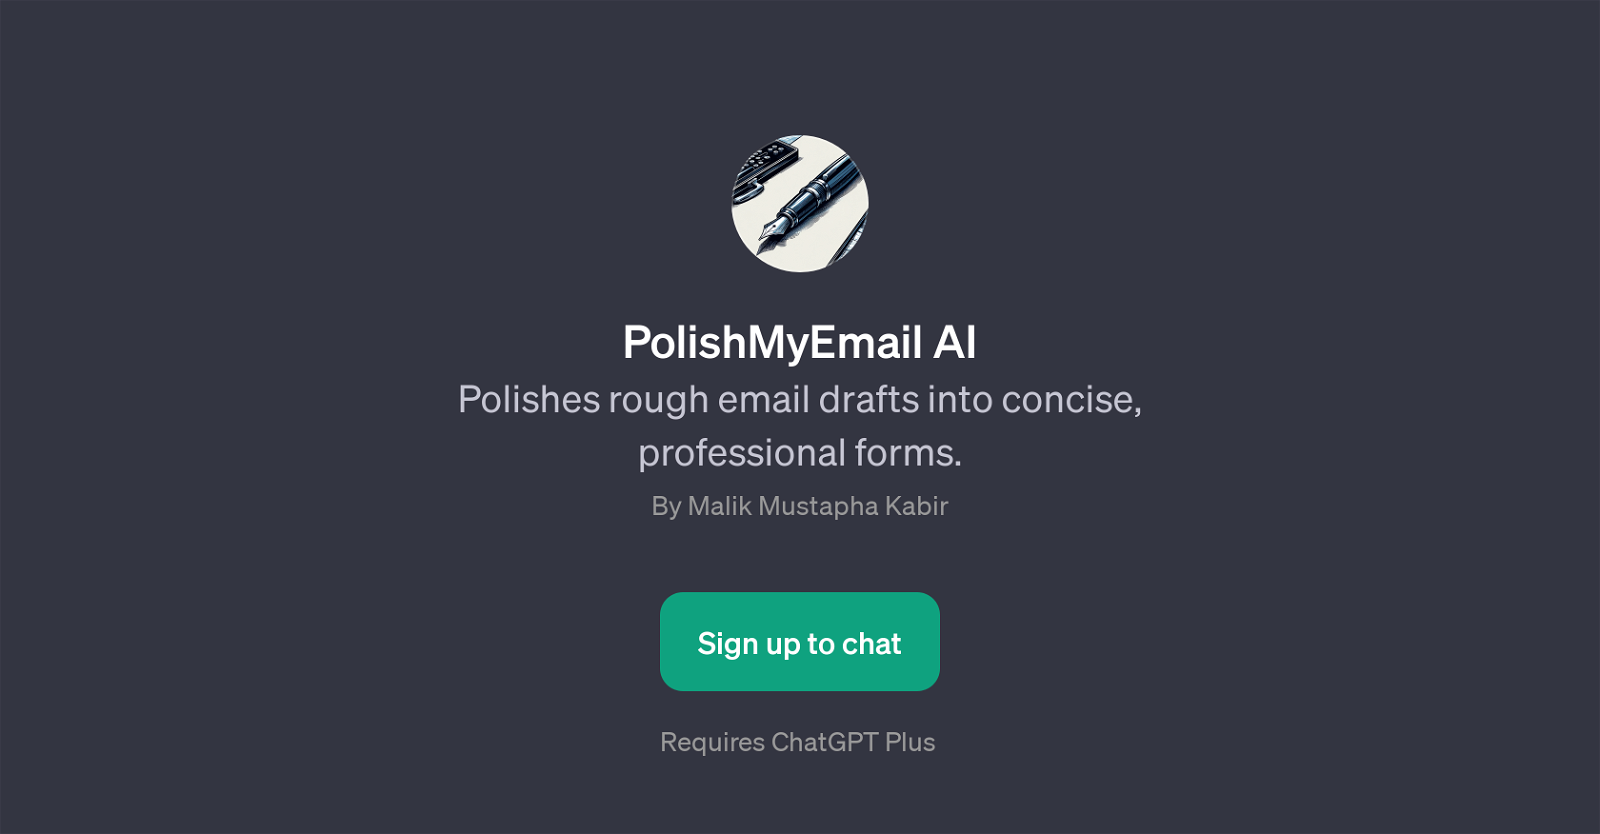 PolishMyEmail AI website